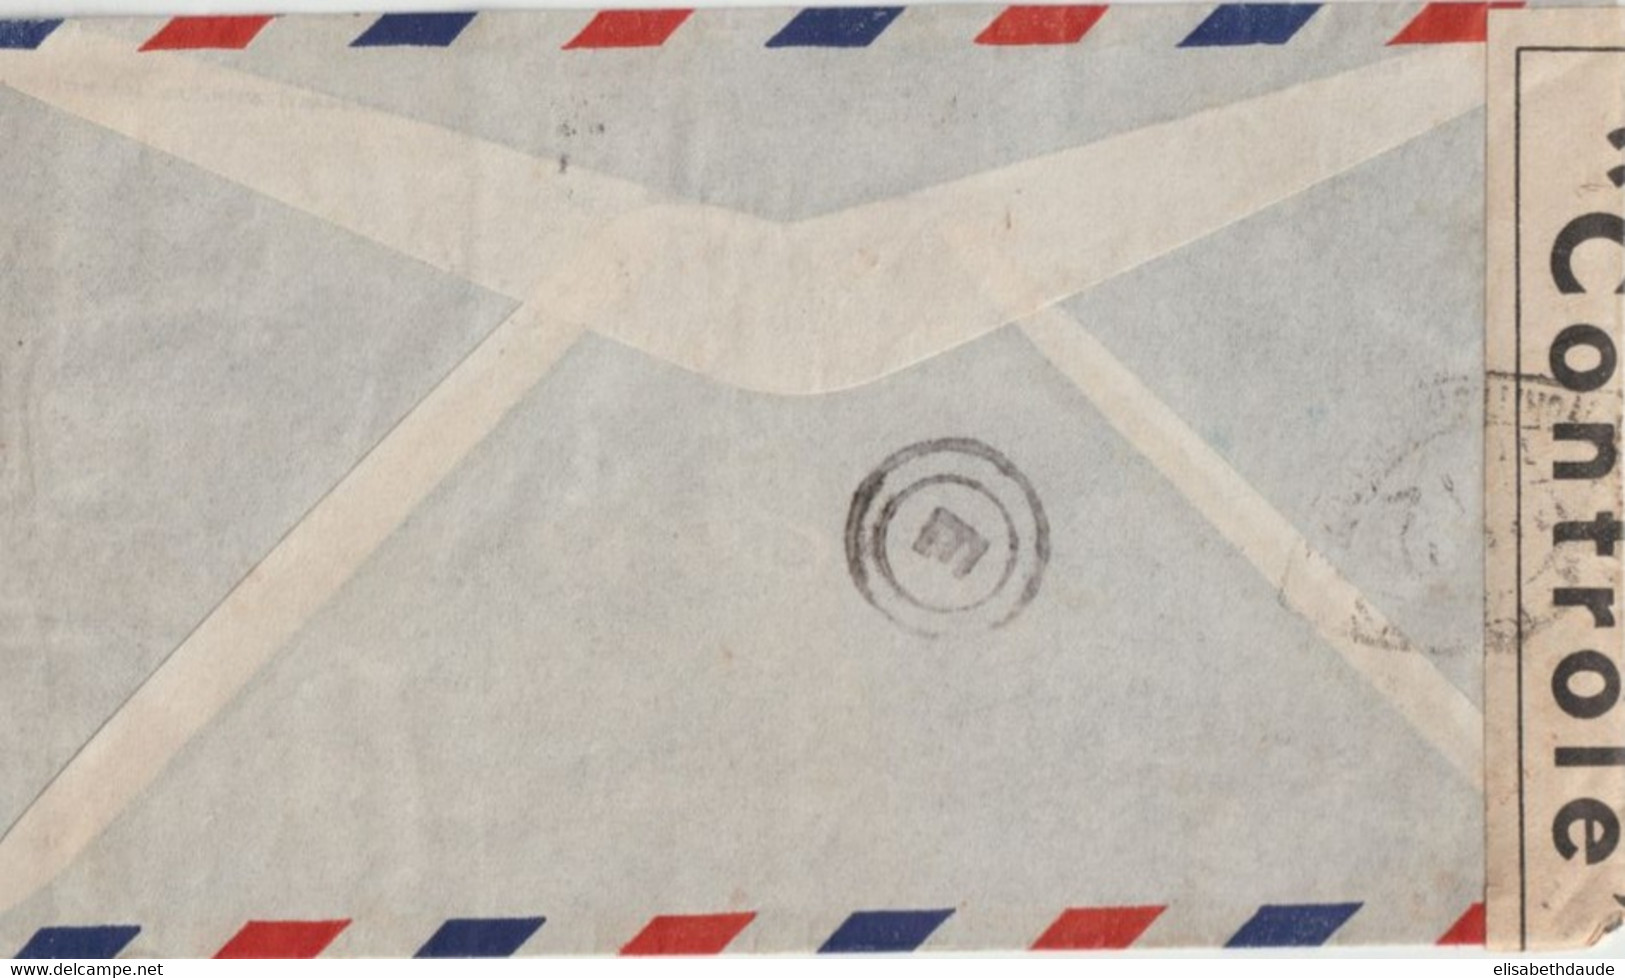 1941 - USA - POSTE AERIENNE - ENVELOPPE AIR MAIL Avec CENSURE FRANCAISE De SAINT JAMES => GENSAC (ZONE LIBRE FRANCE) - Briefe U. Dokumente